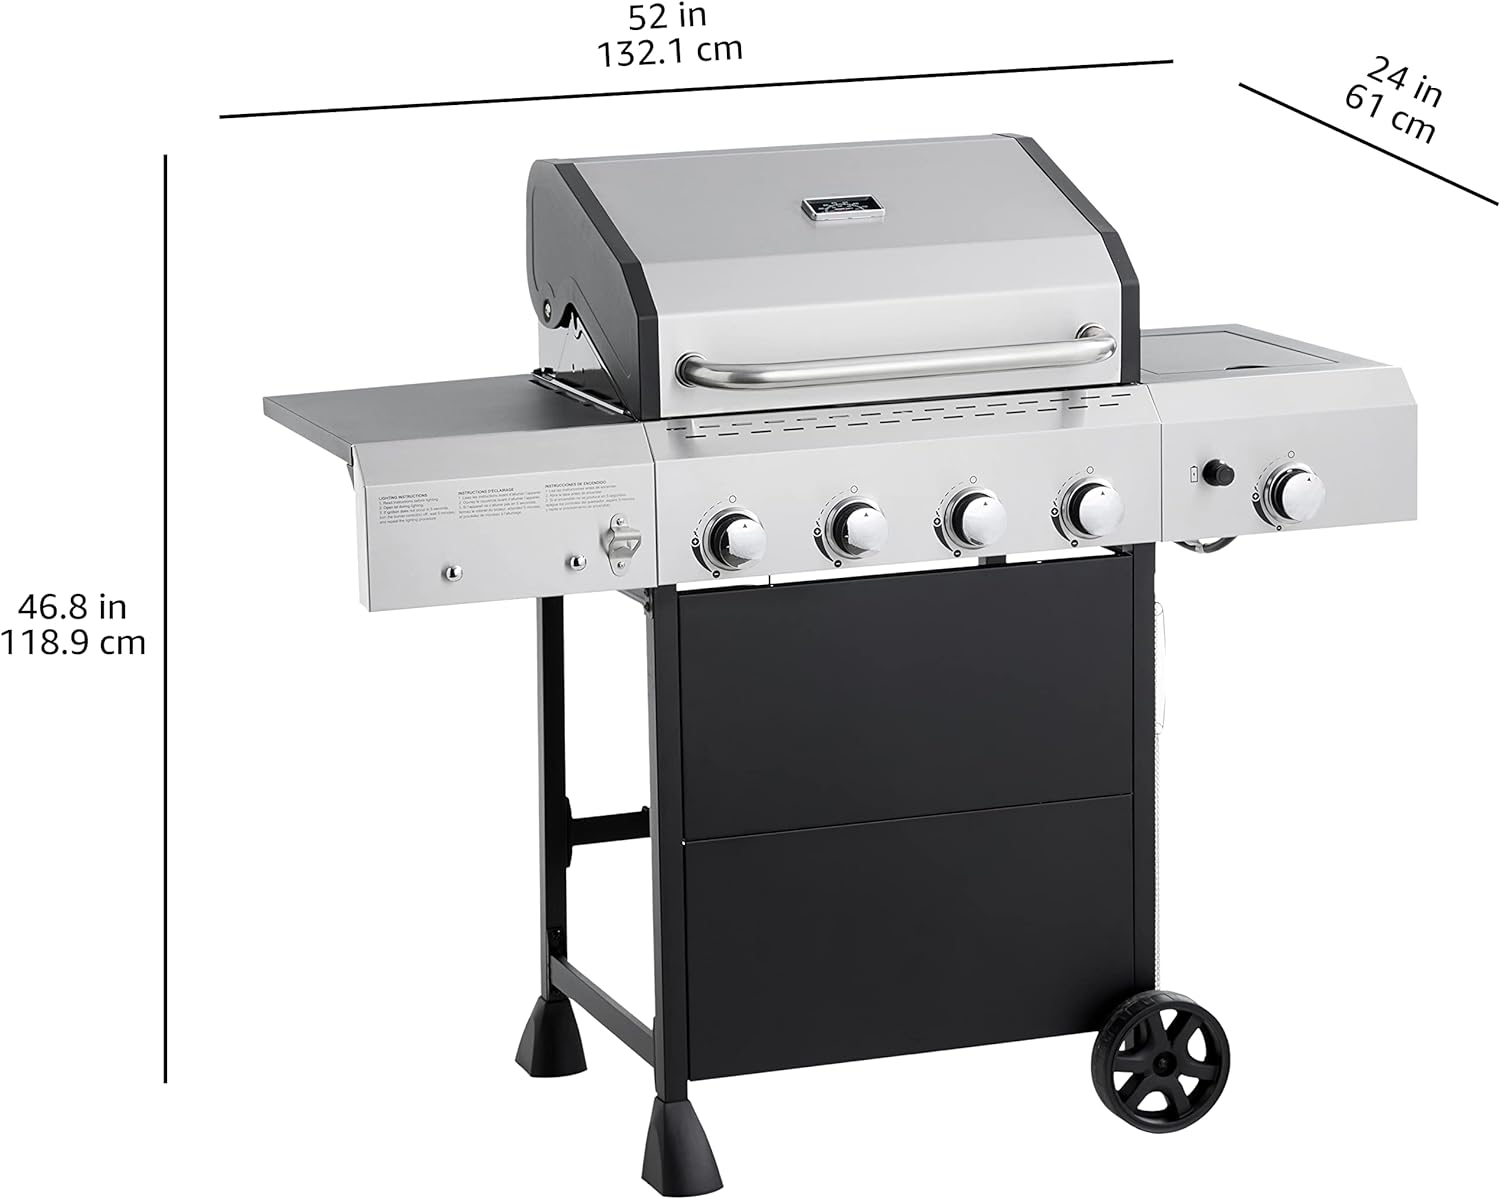 Amazon Basics Freestanding Gas Grill with Side Burner, 4 Burner (52,000 BTU)